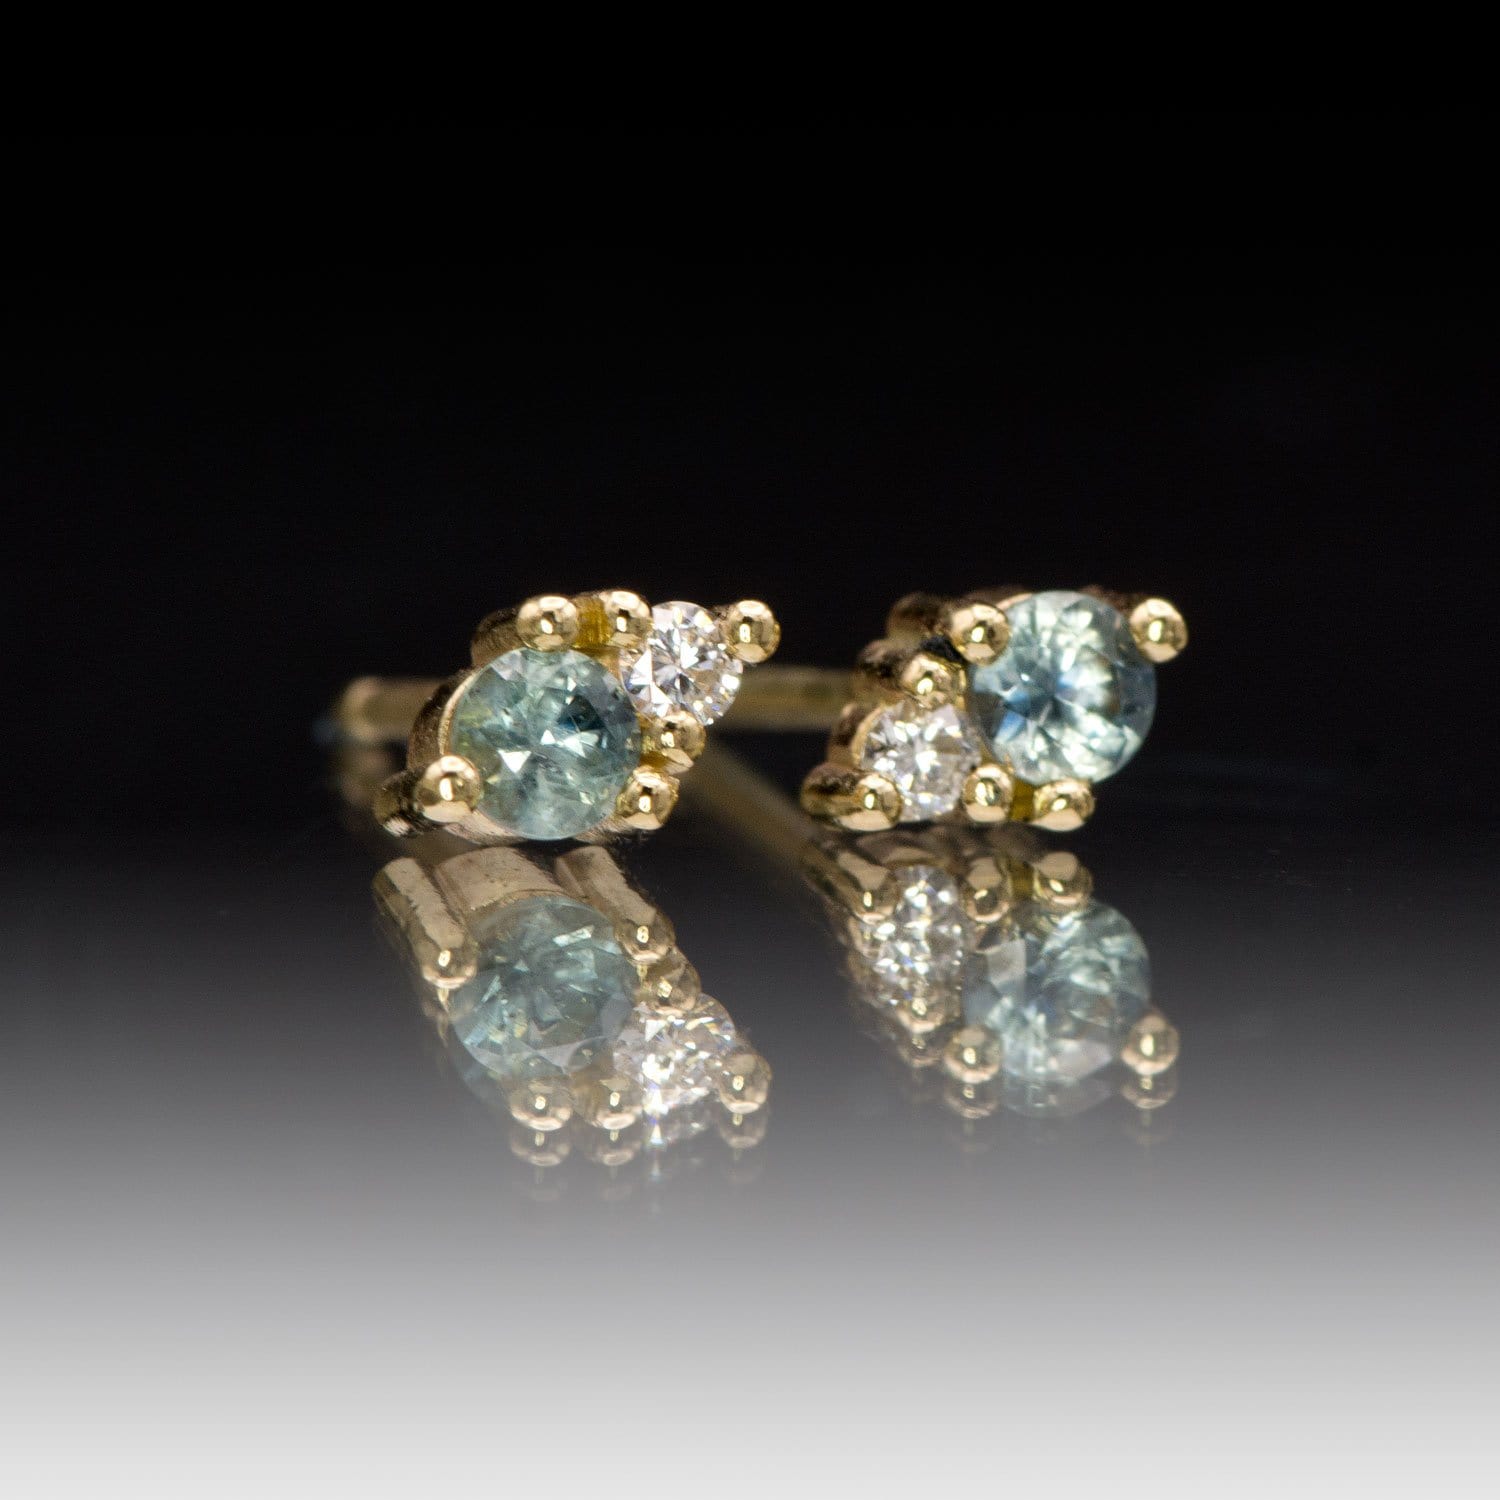 Fair Trade Blue-Green Montana Sapphire & Diamond Stud Earrings 14k Yellow Gold Earrings by Nodeform